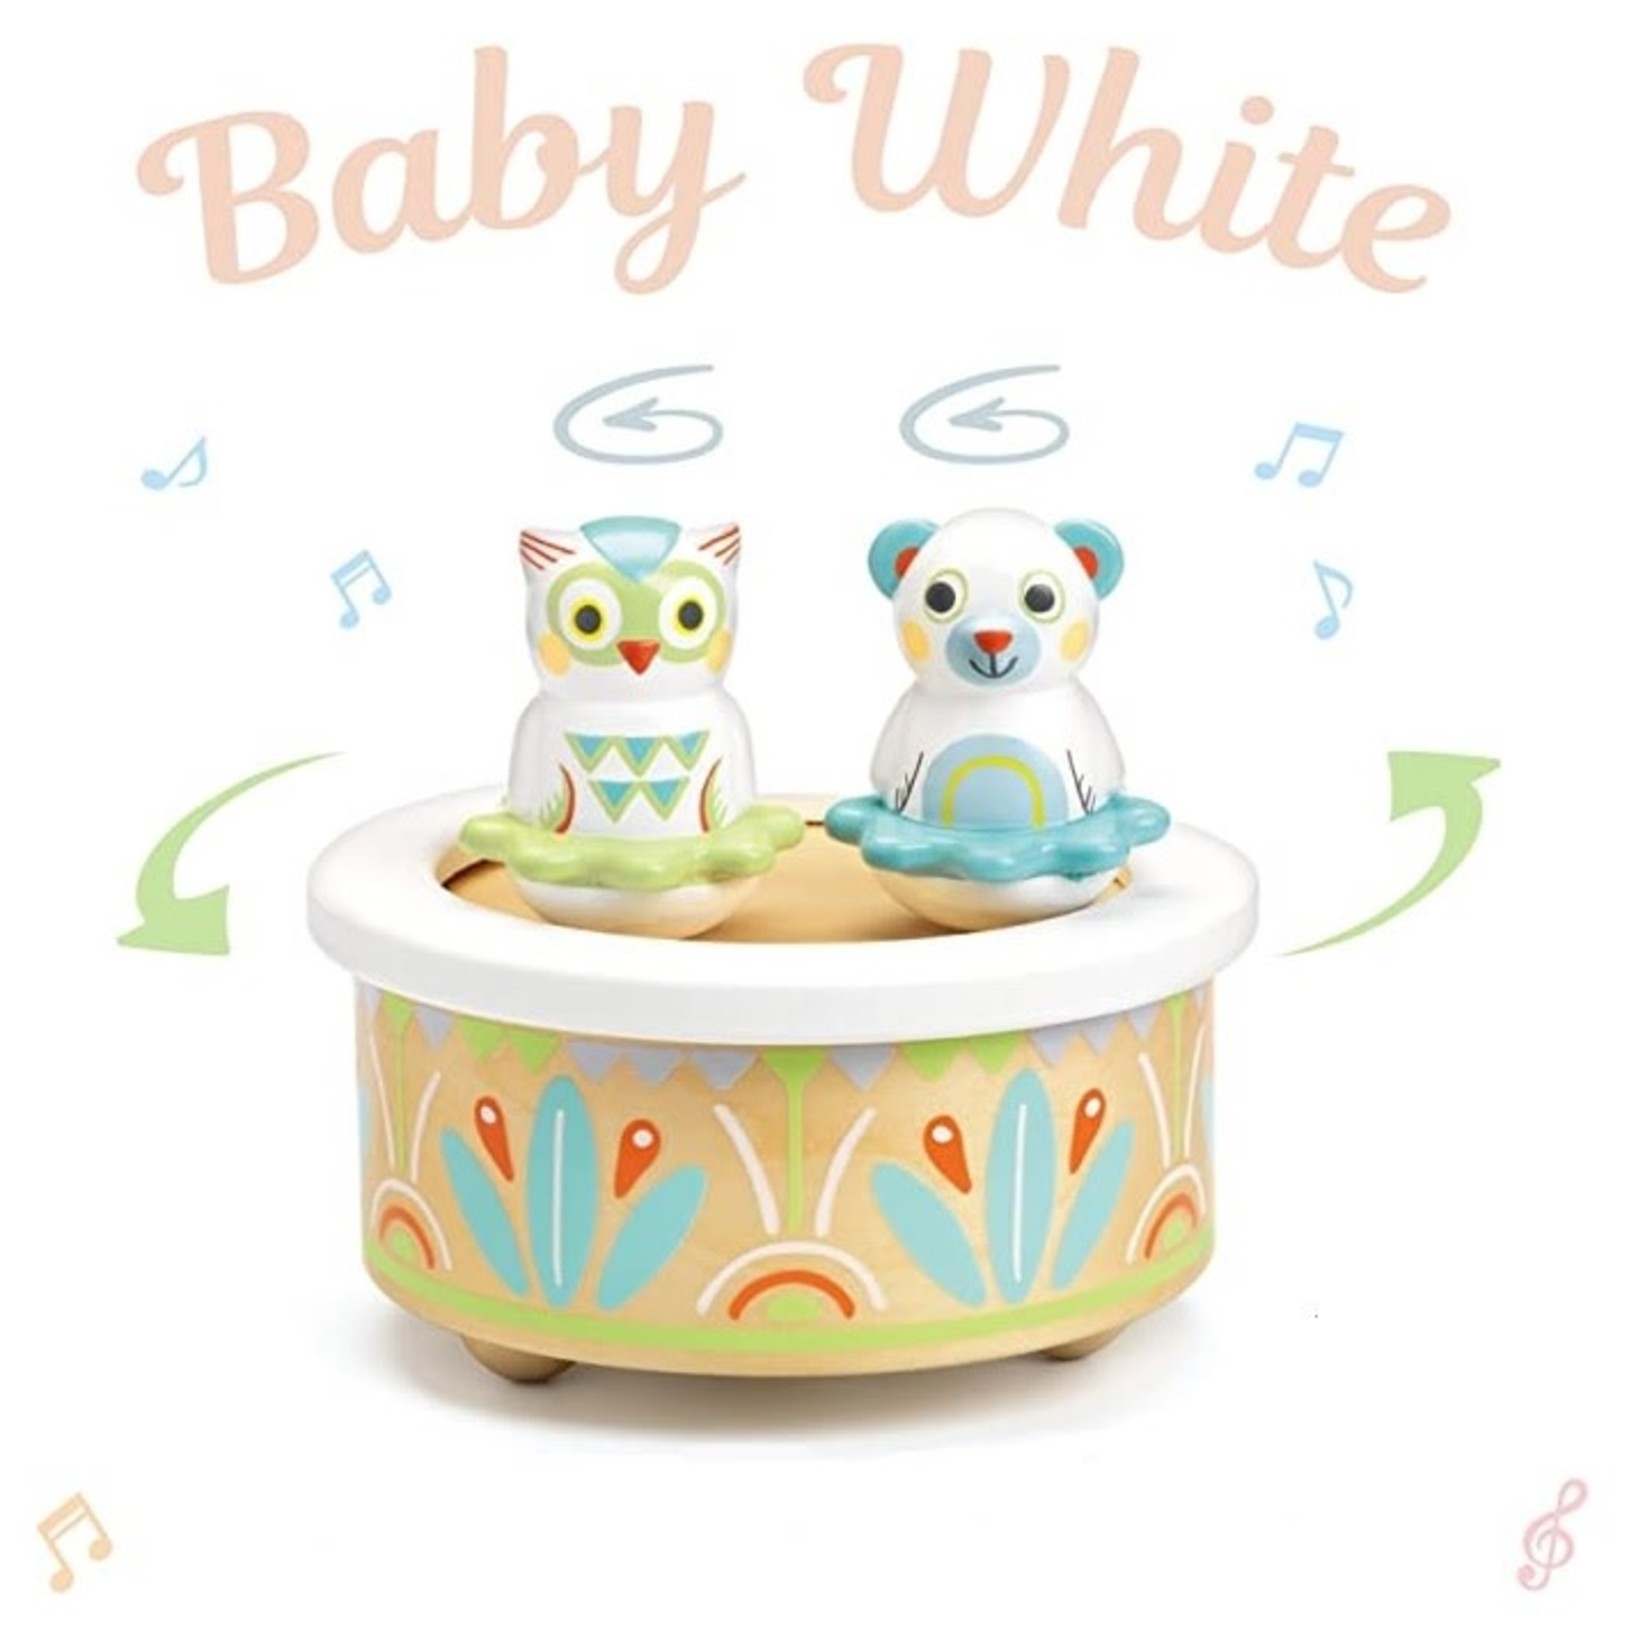 Djeco DJECO - Magnetic Music Box 'Baby Music'